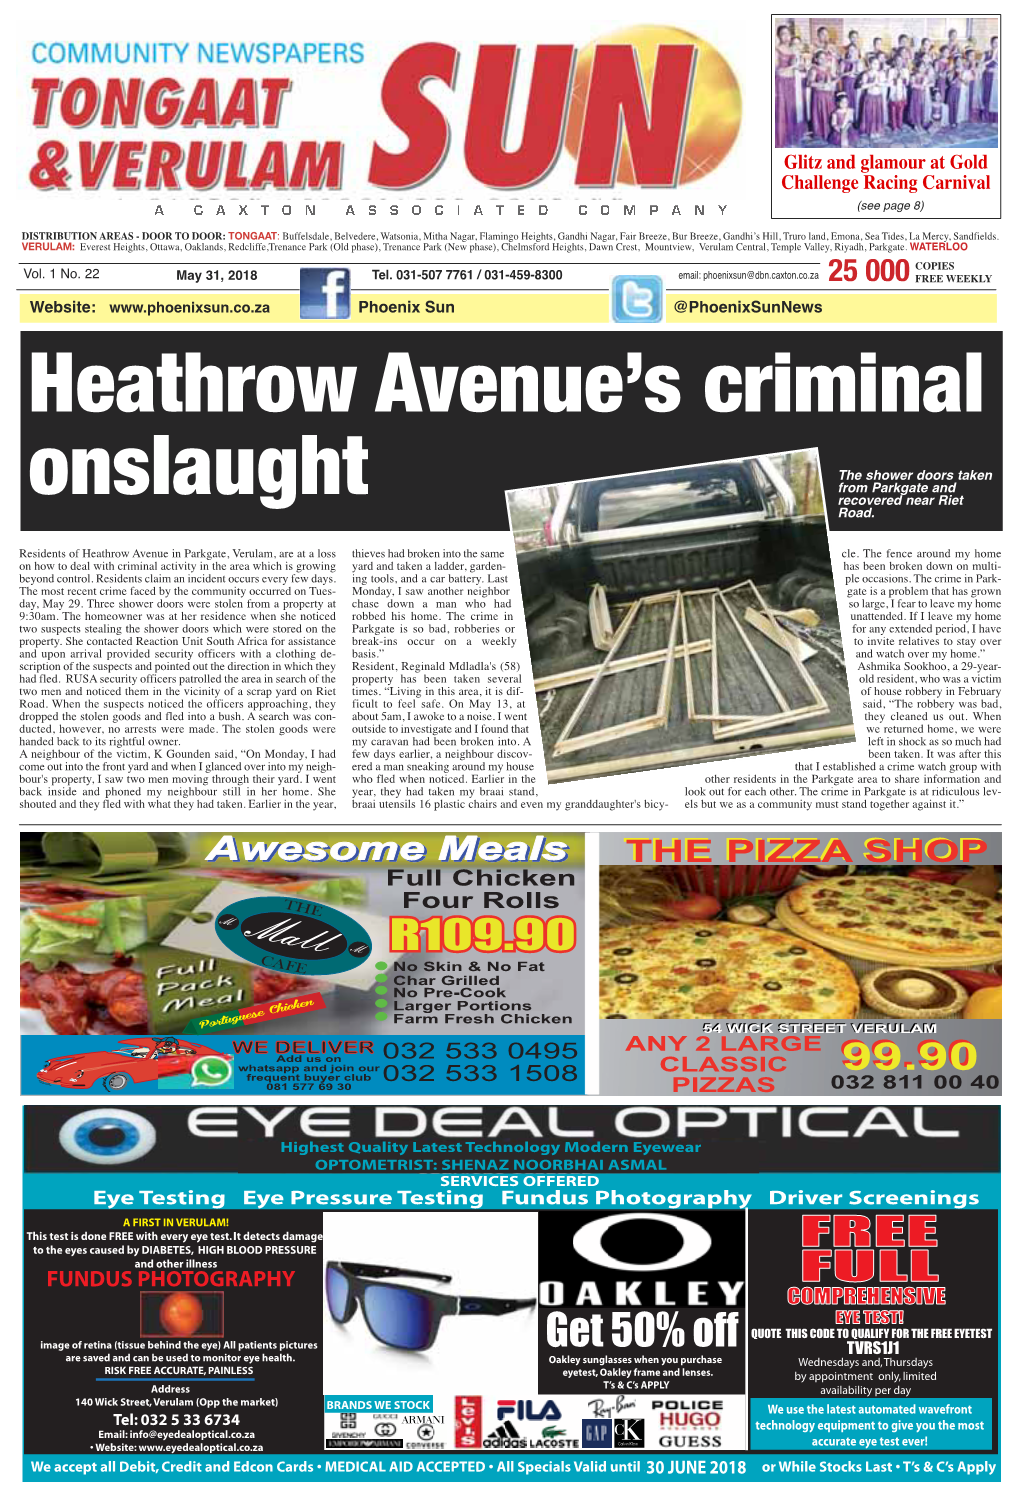 Heathrow Avenue's Criminal Onslaught